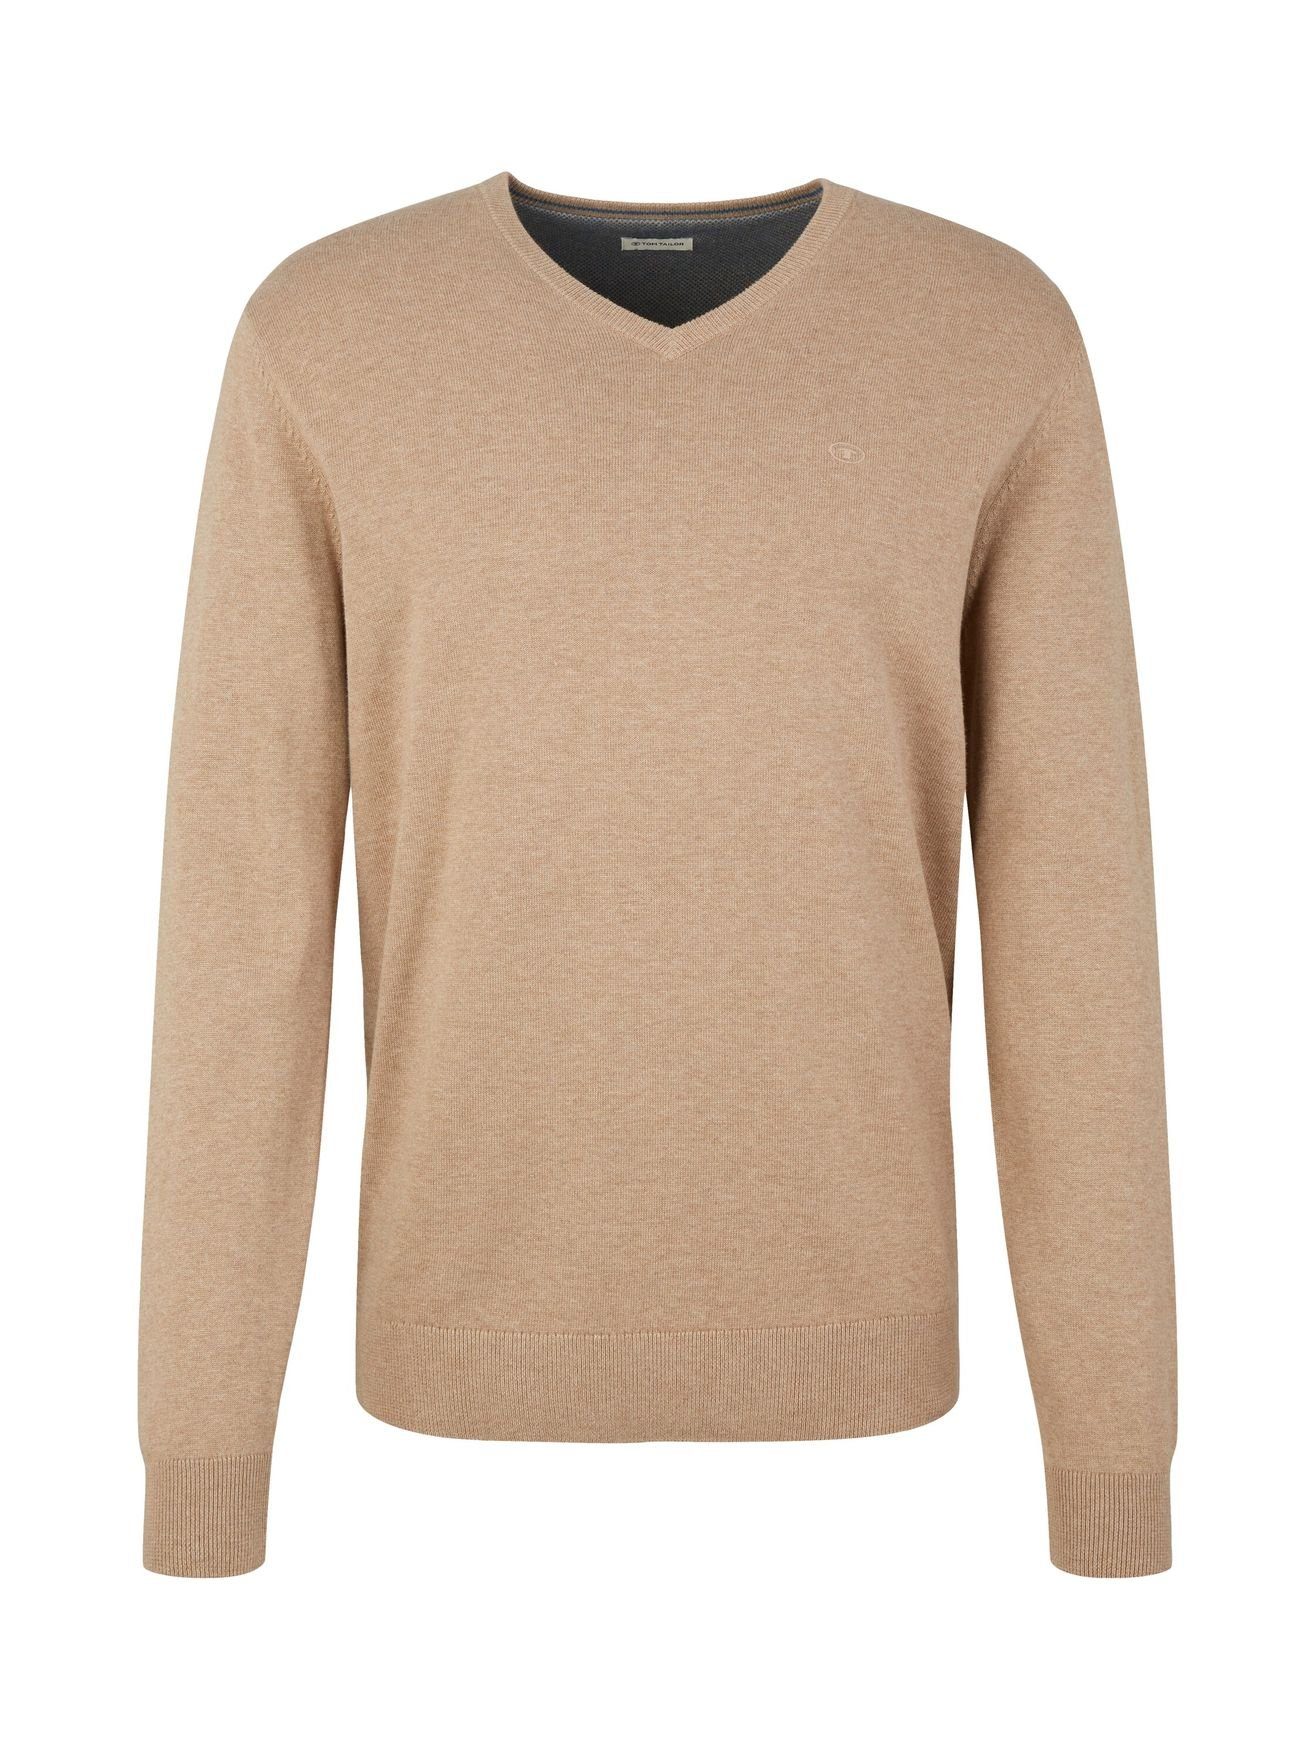 TAILOR Sweater 4652 Feinstrick in Strickpullover Basic V-Ausschnitt TOM Dünner Pullover Braun